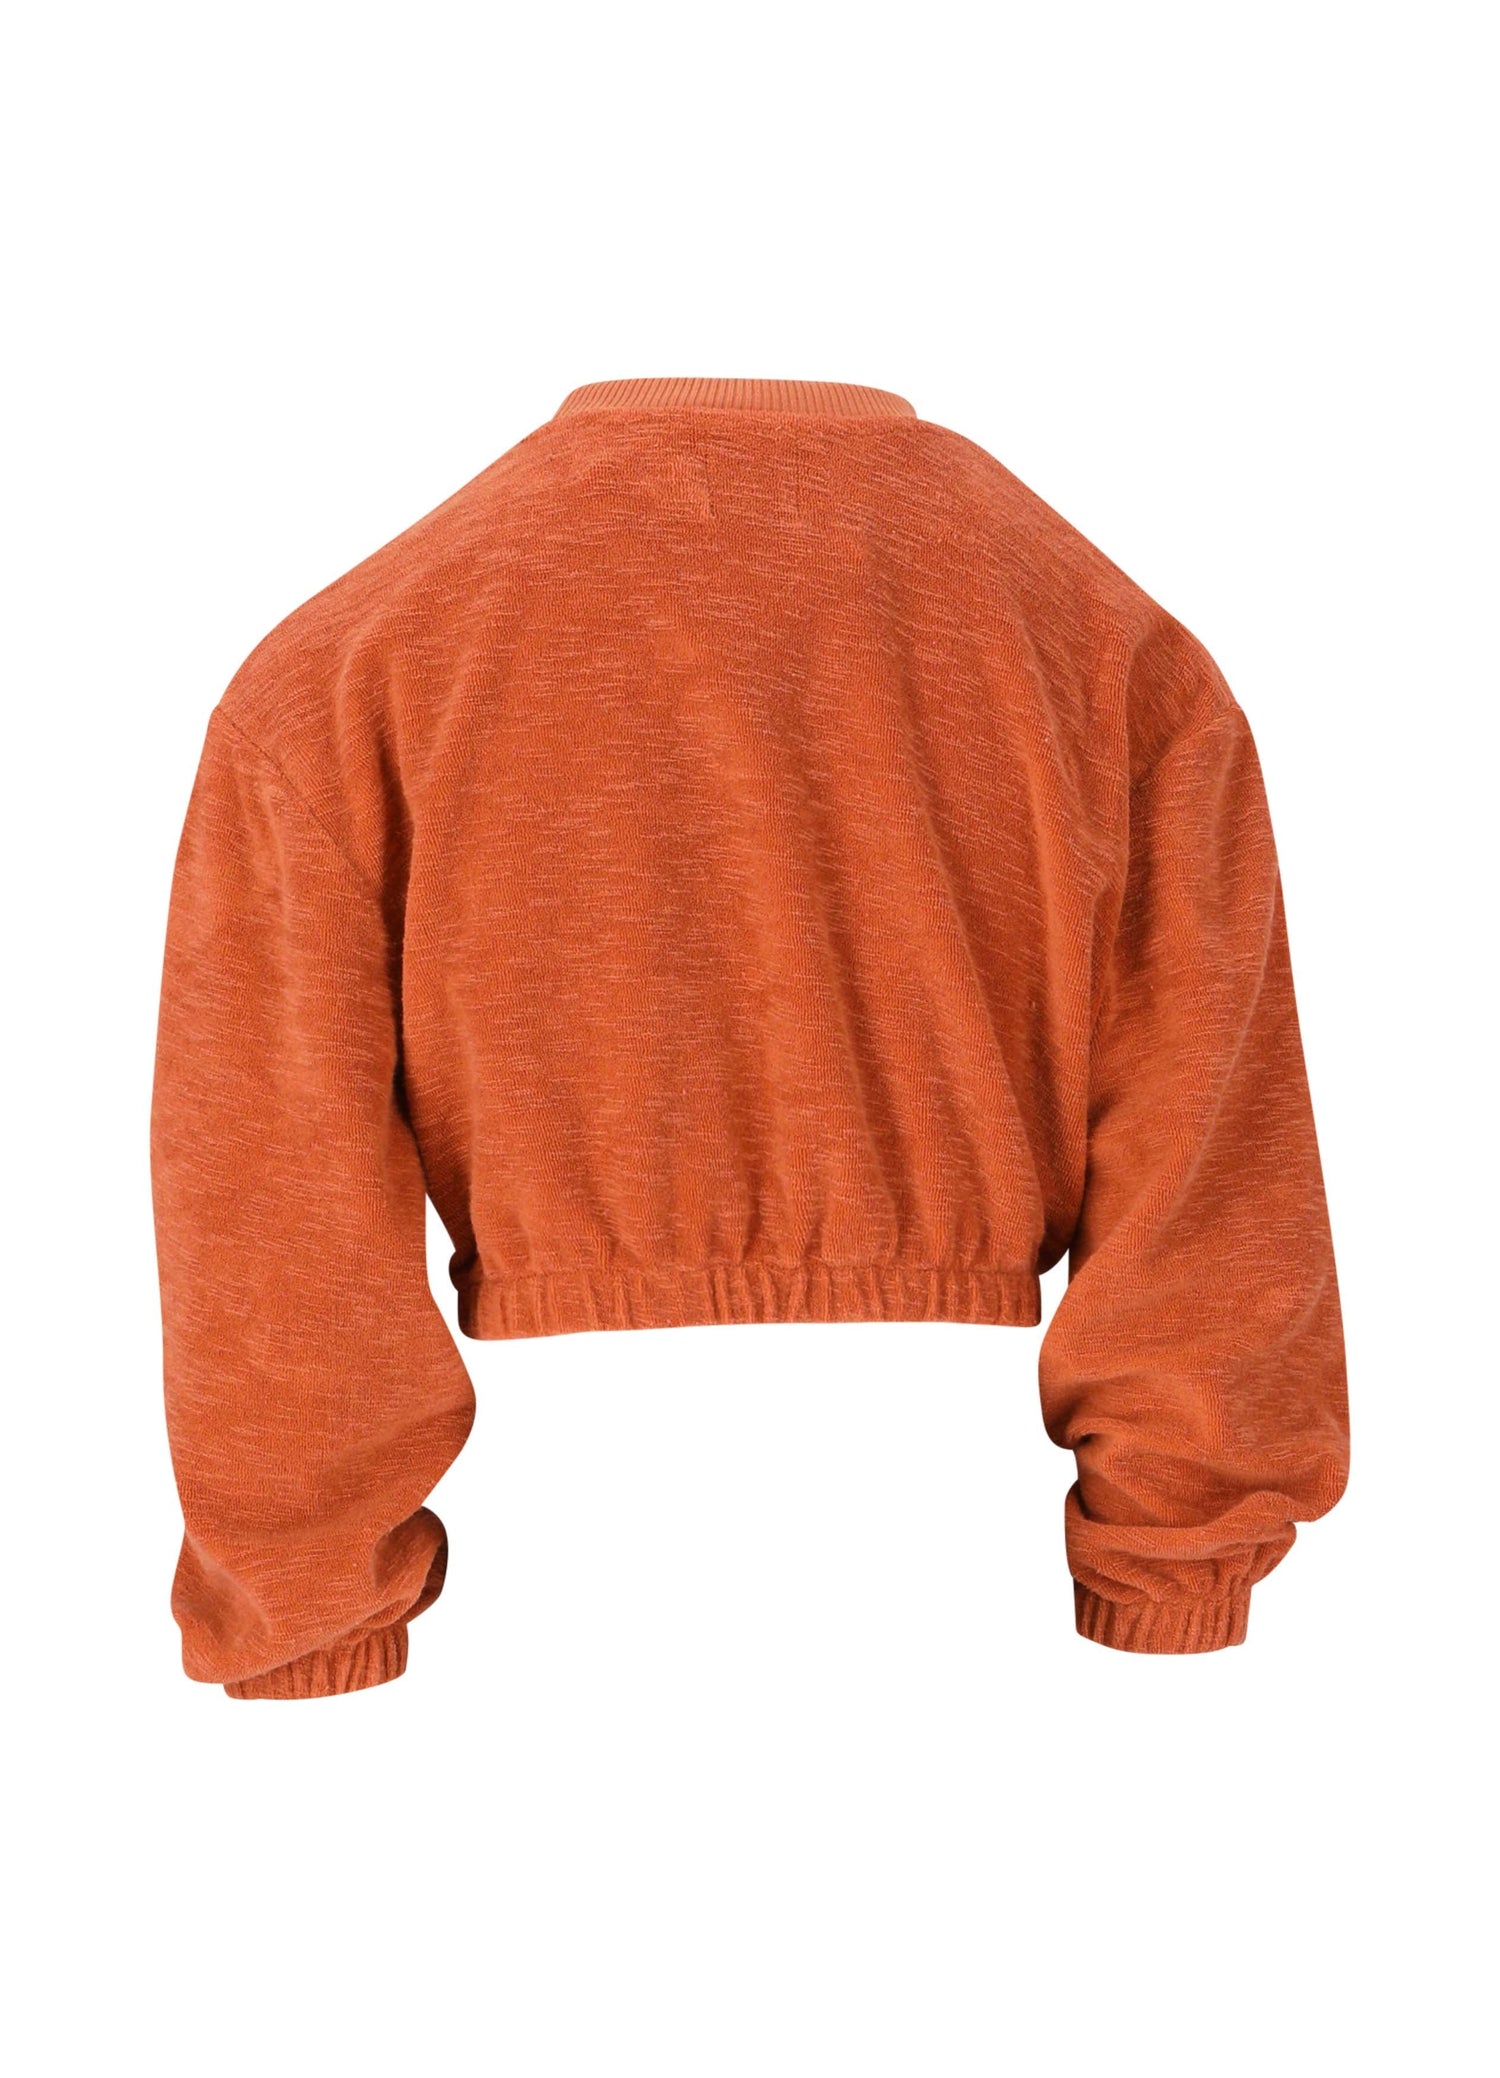 Top No. 15 - Caramel Sweatshirts LMN3 